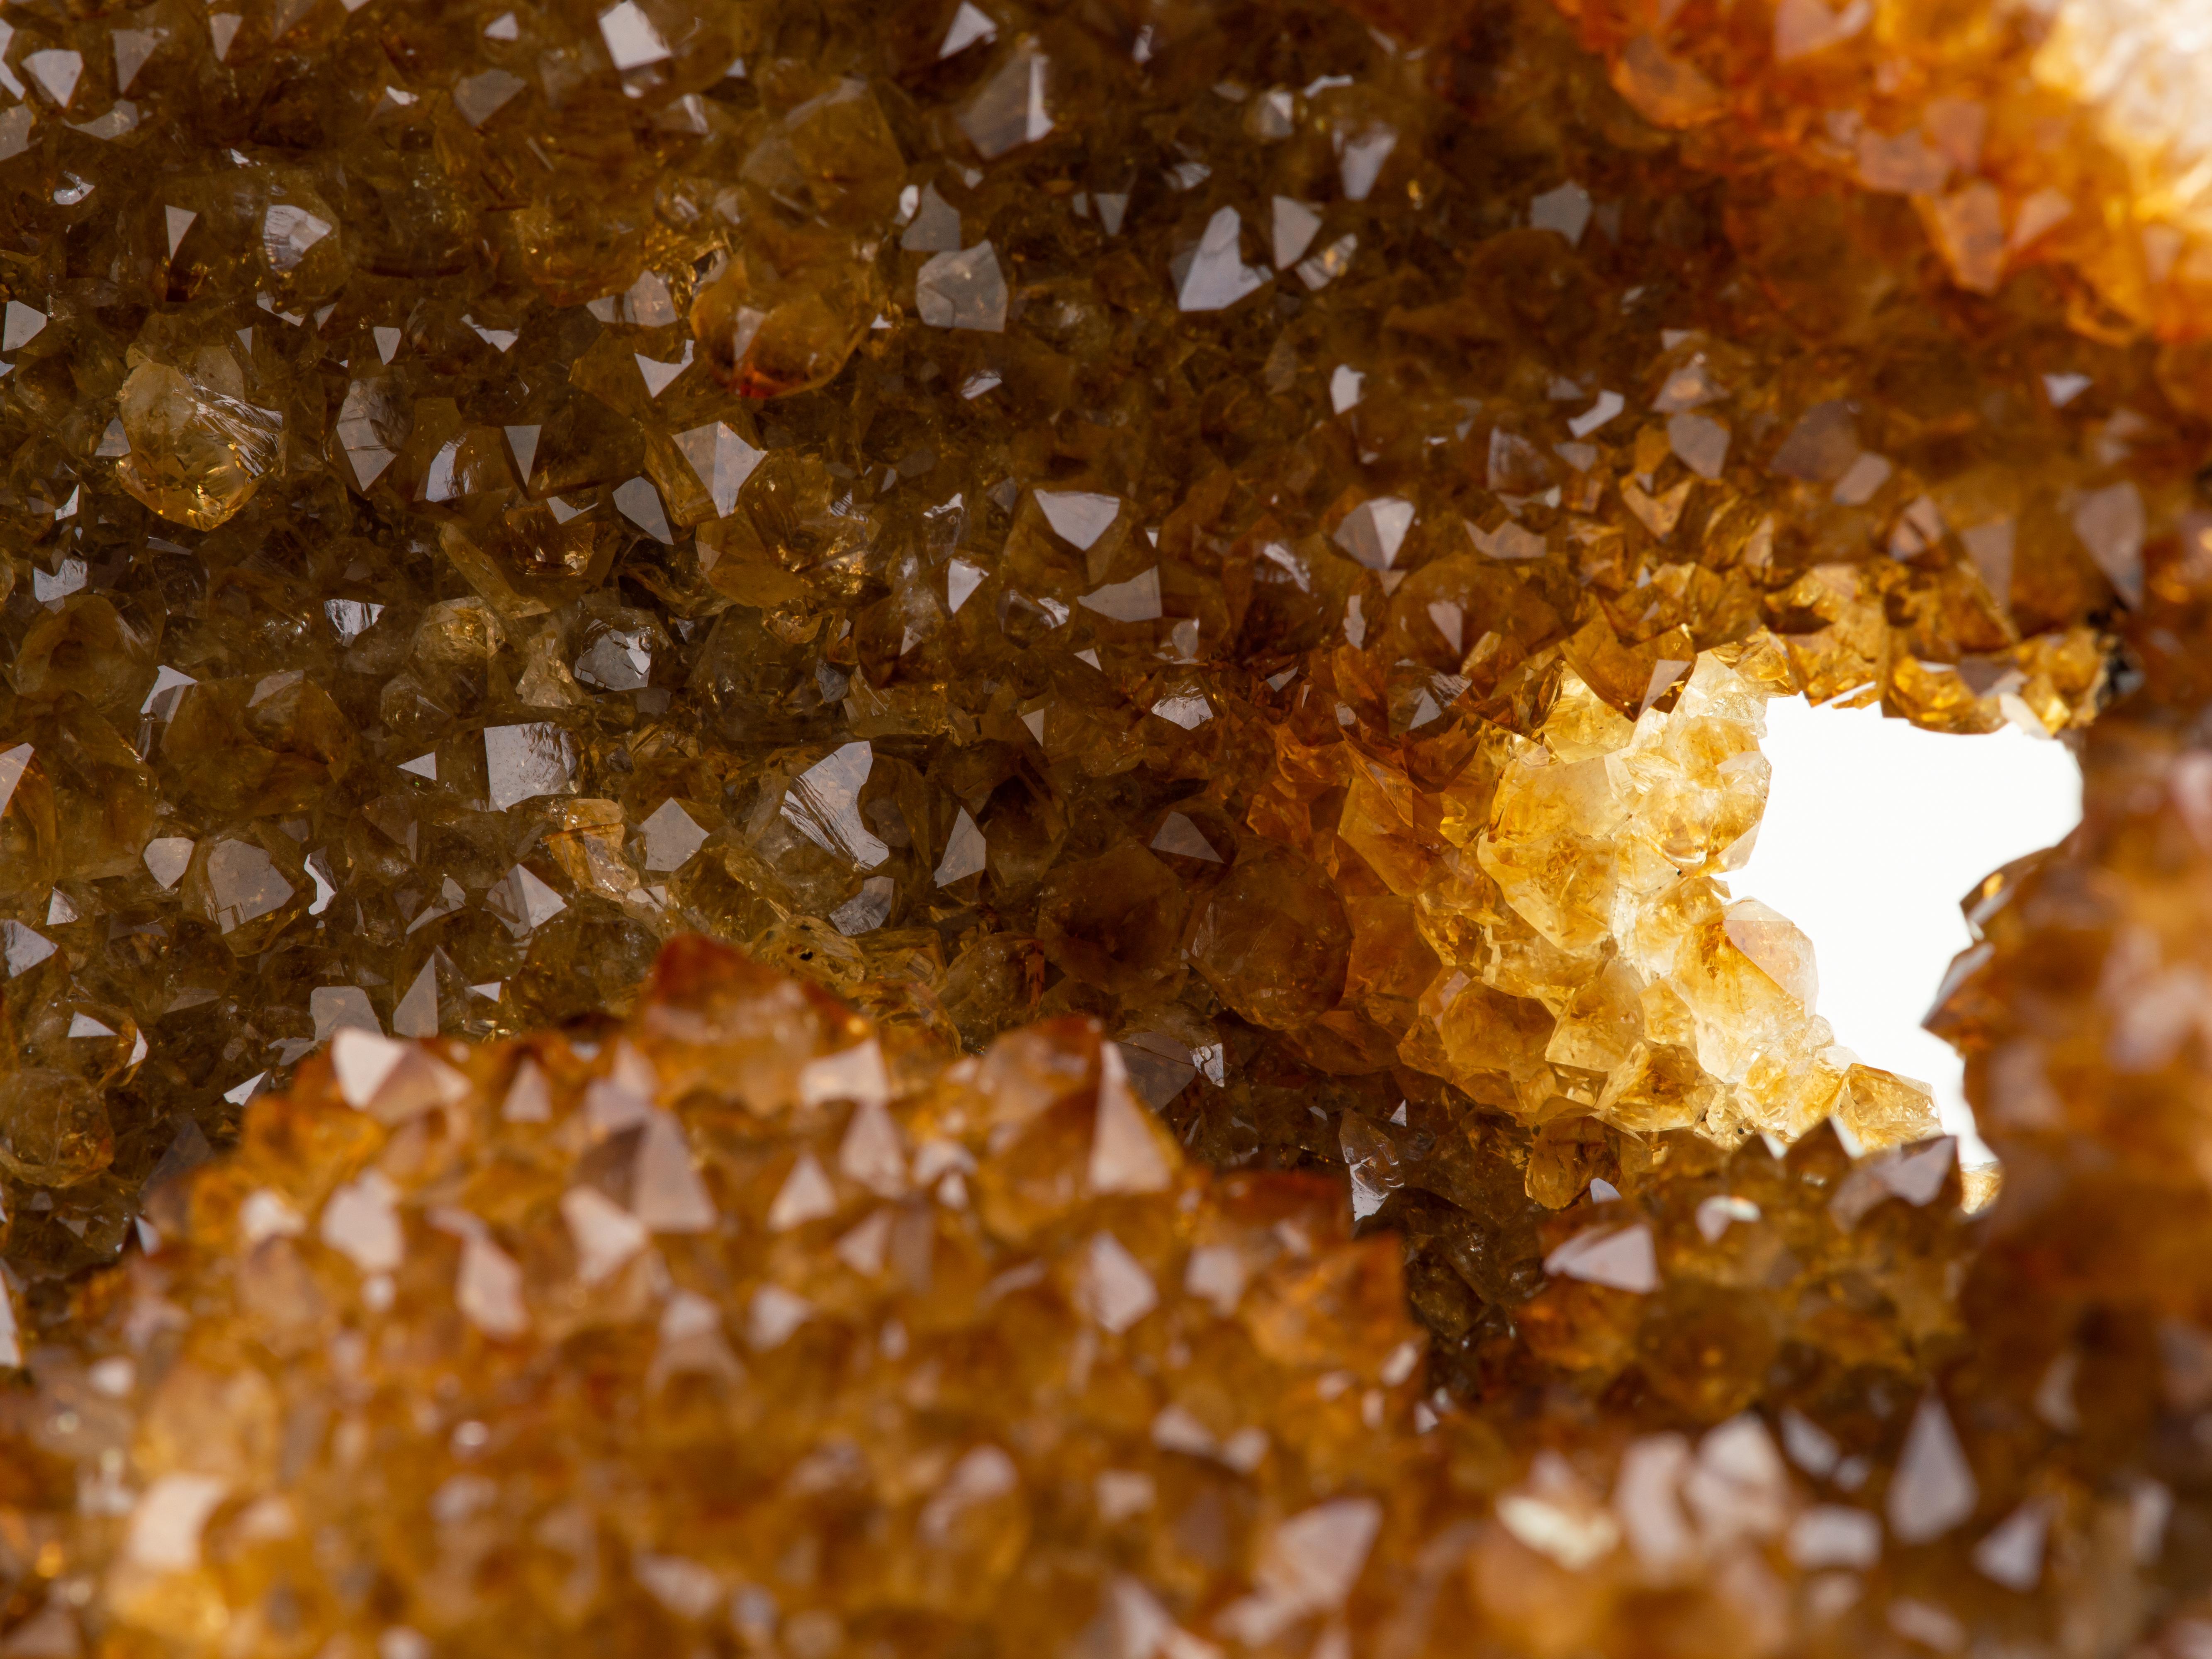 Agate Rough half geode of yellow - orange Citrine crystals